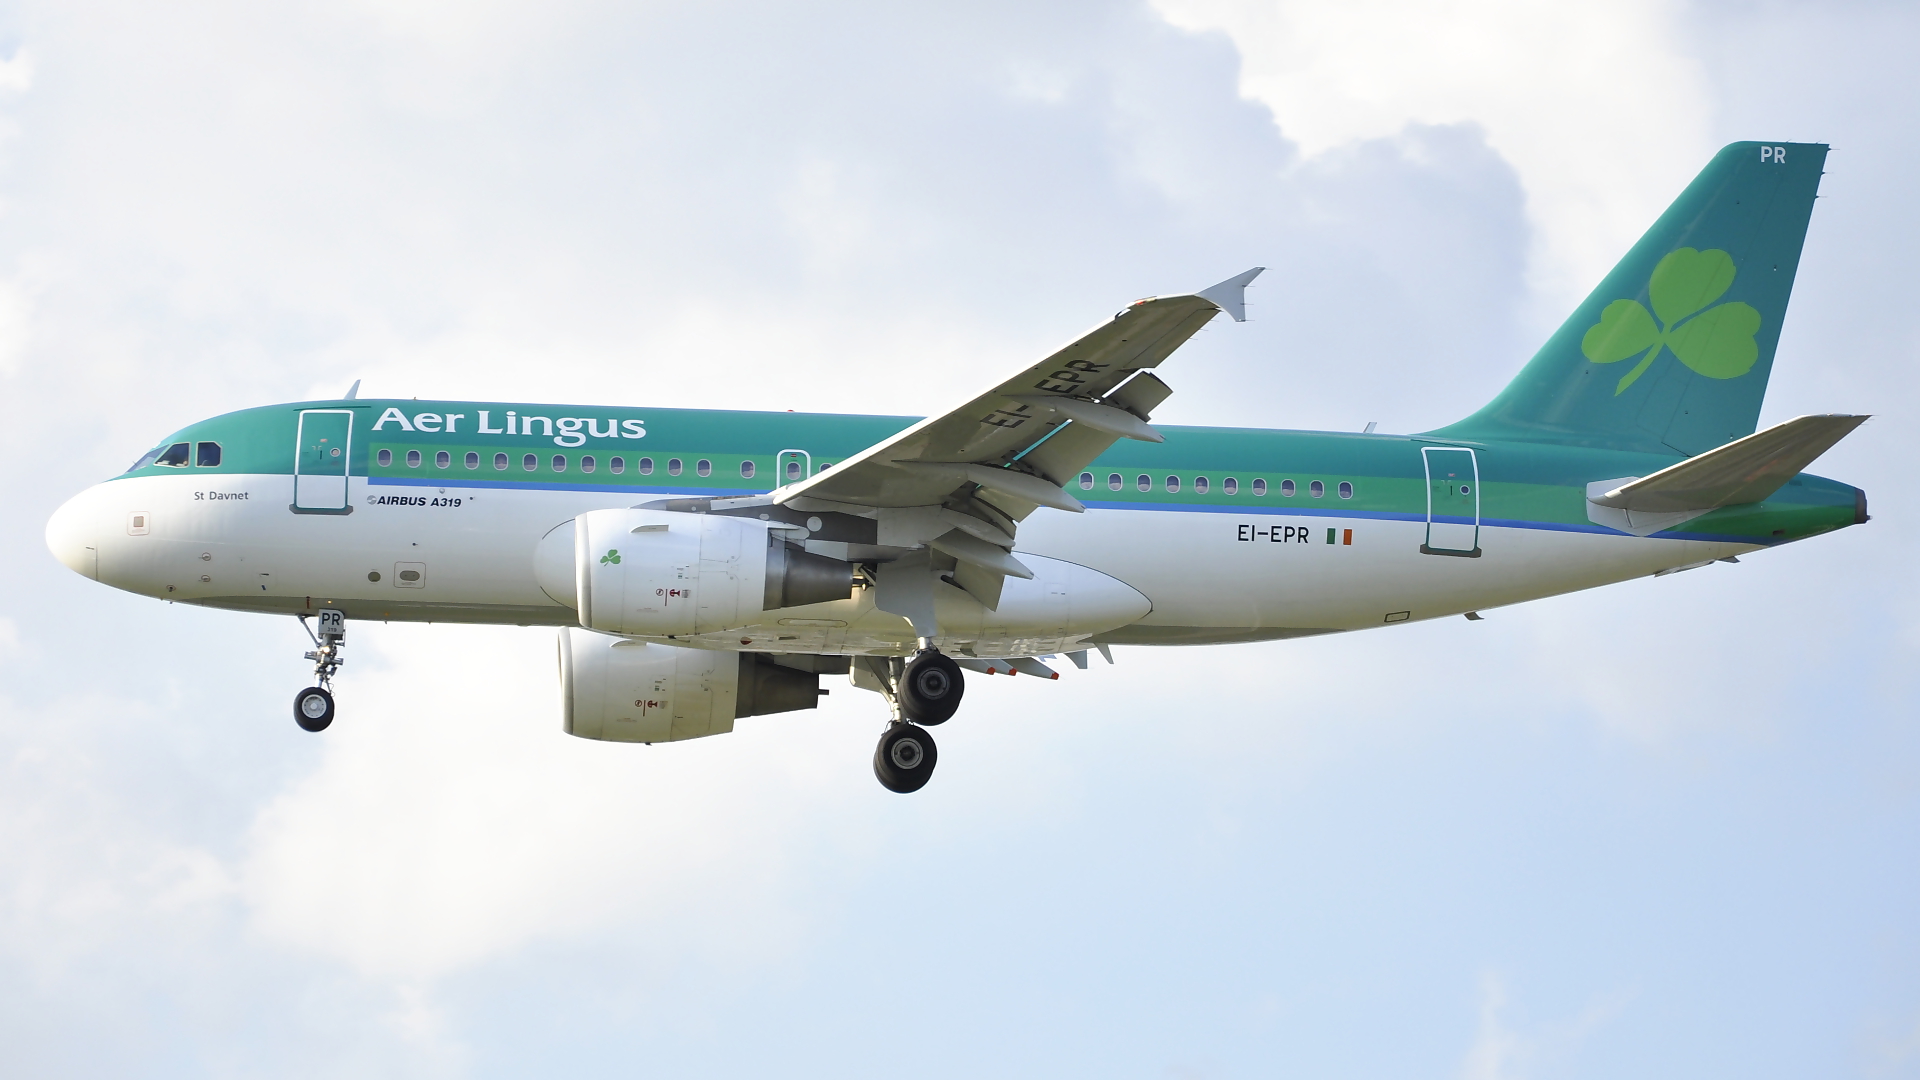 EI-EPR ✈ Aer Lingus Airbus 319-111 @ London-Heathrow